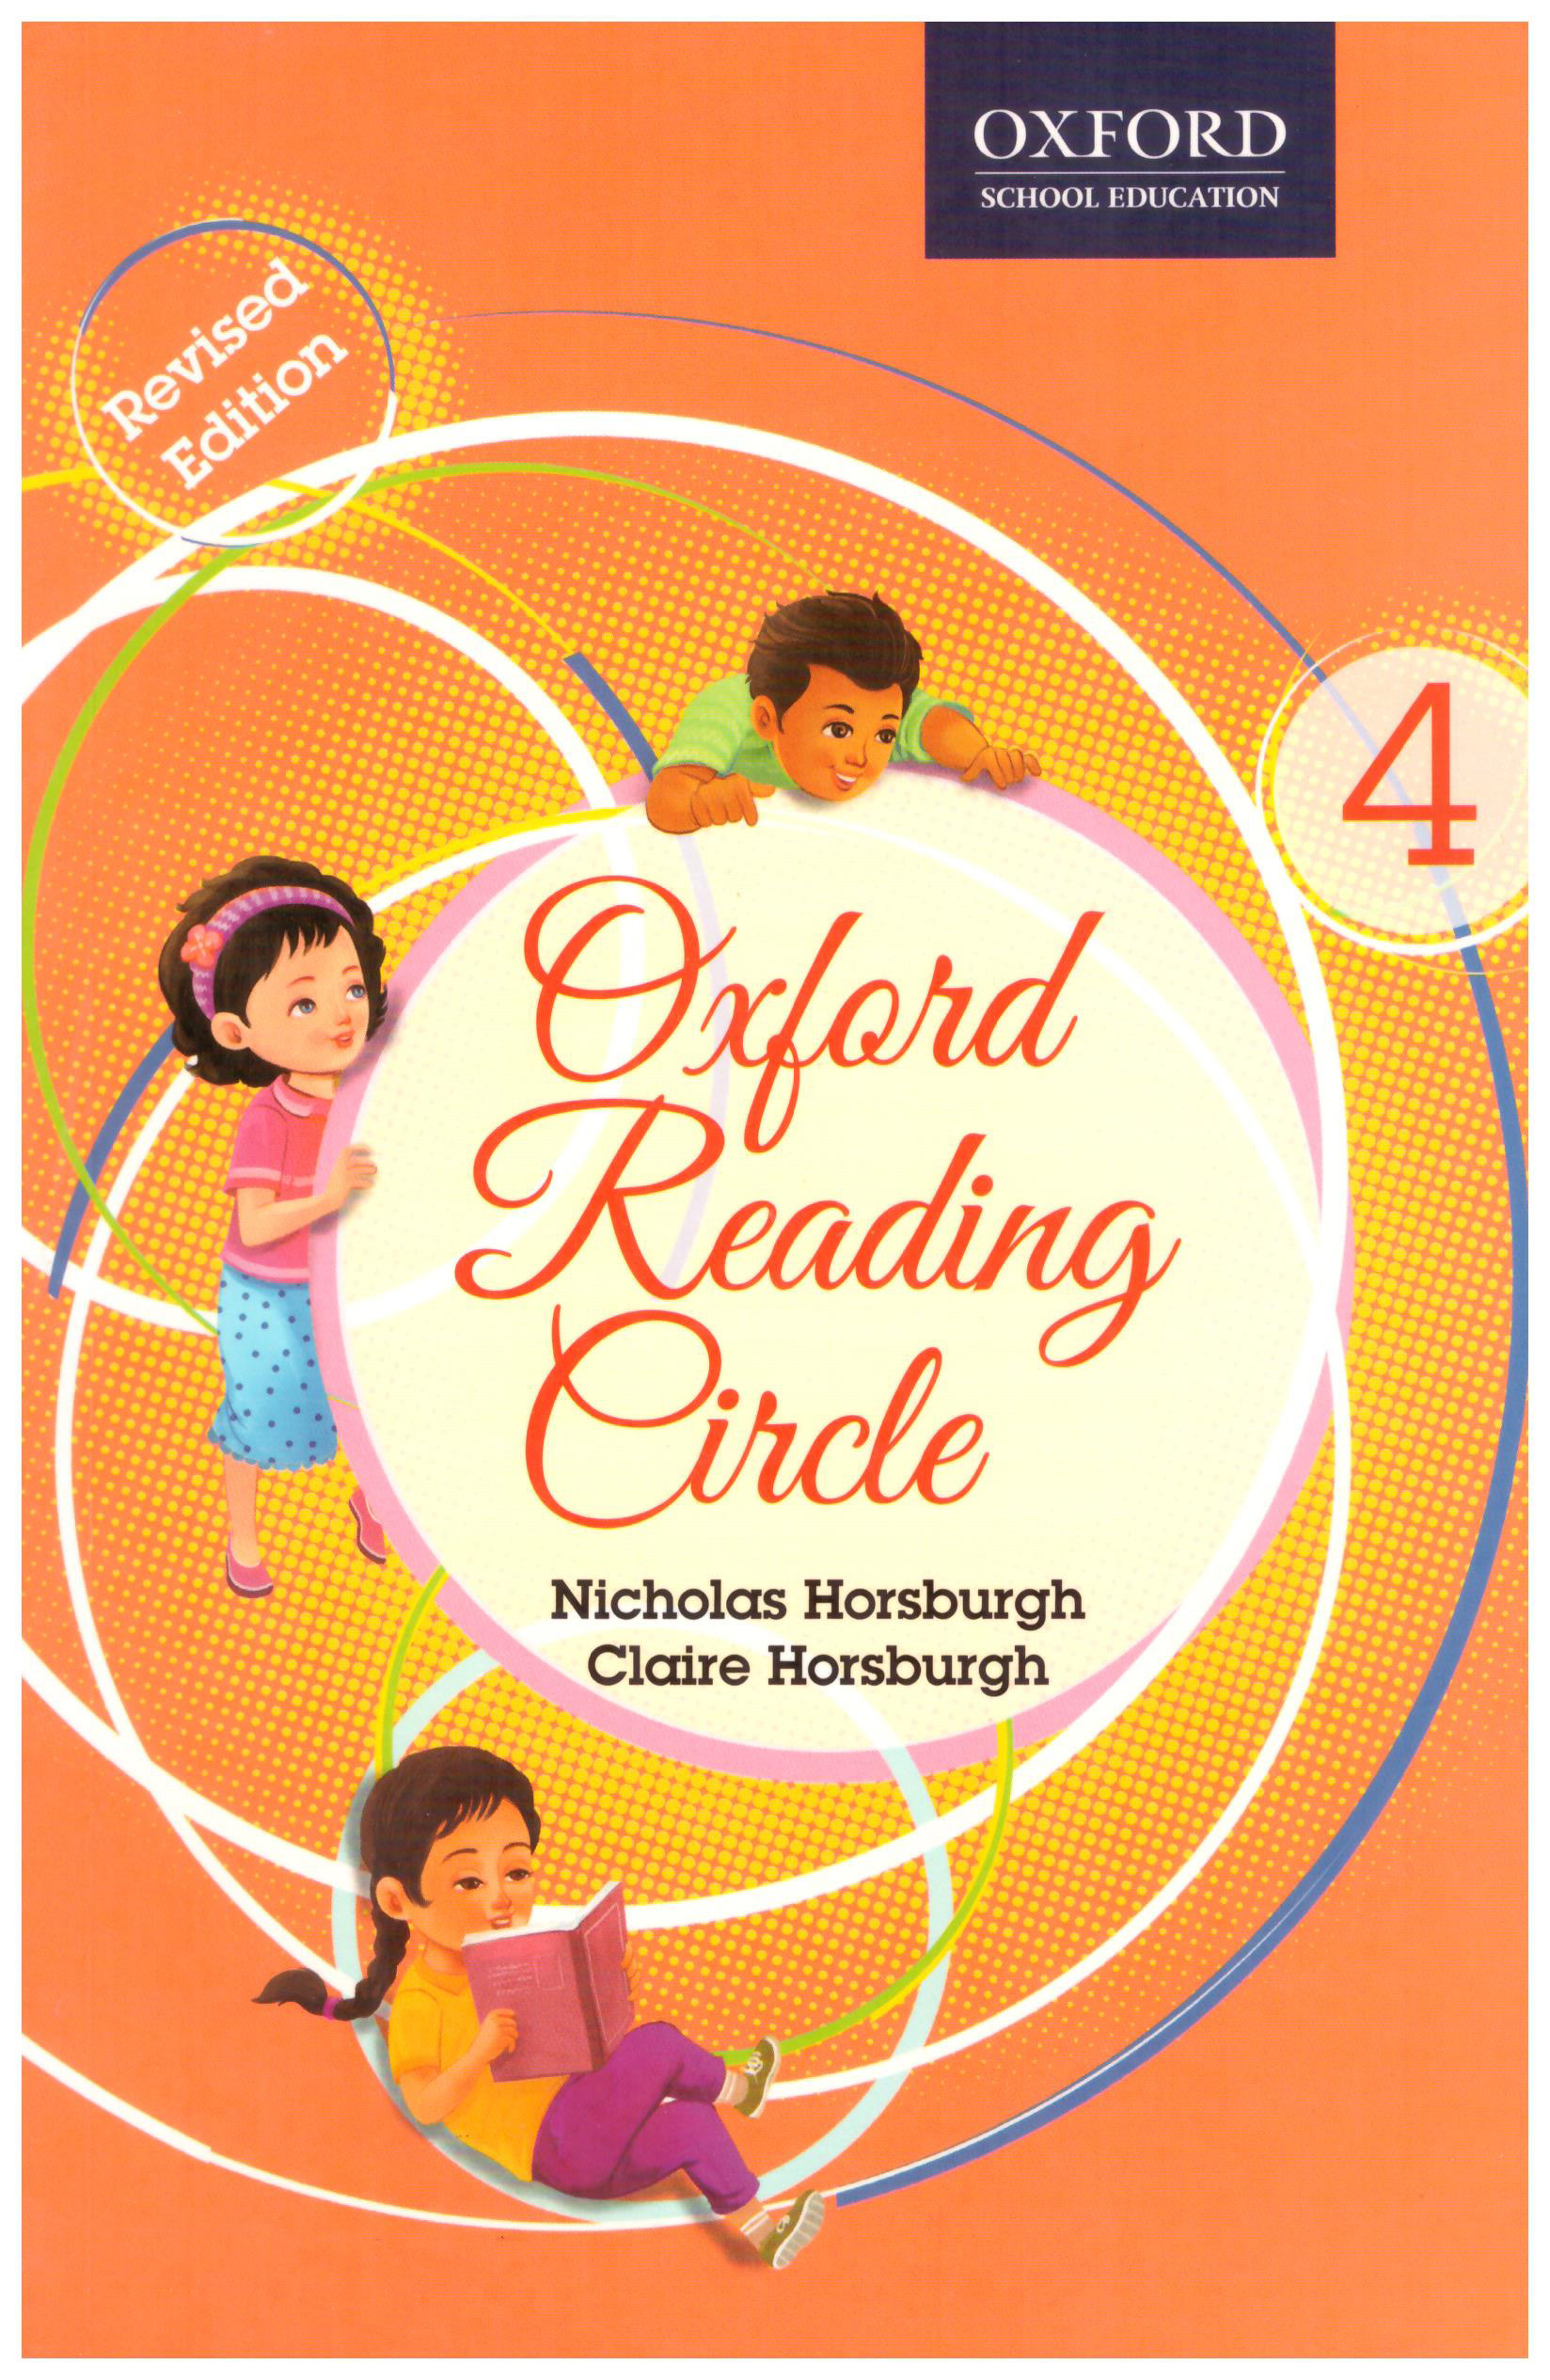 Oxford Reading Circle 4